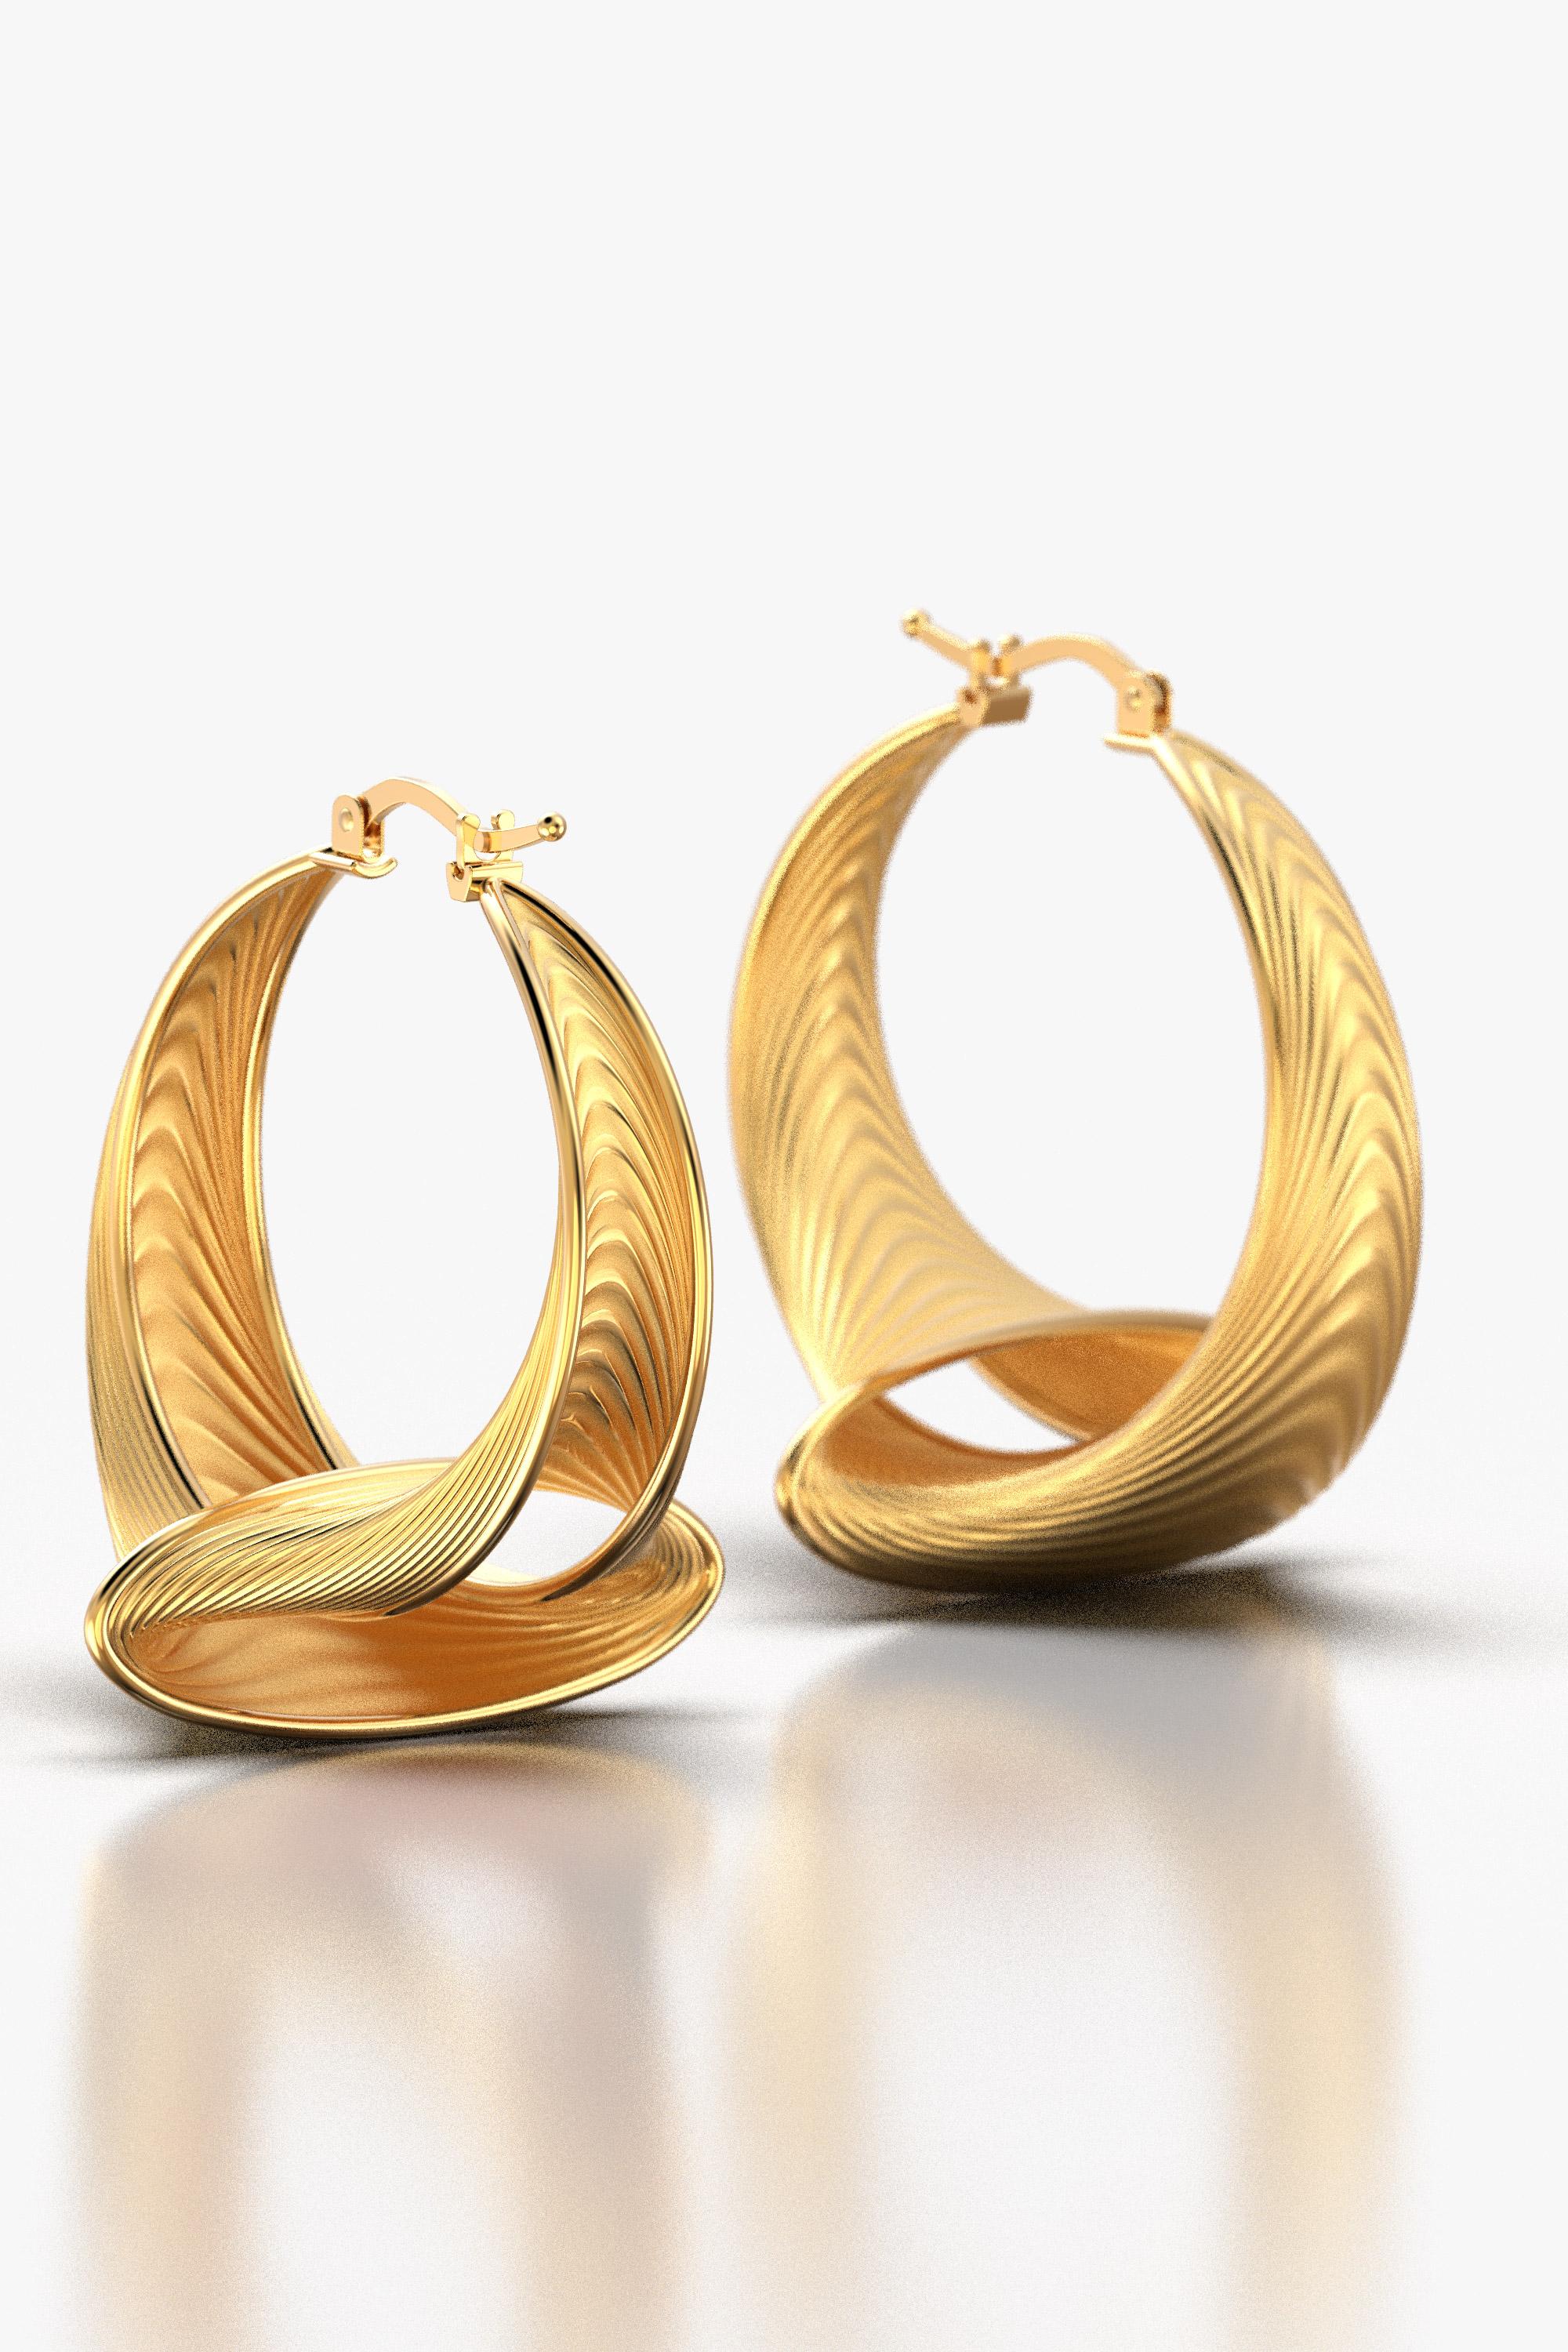 Women's  Oltremare Gioielli 14k Gold Hoop Earrings Made in Italy, Italian Fine Jewelry  For Sale